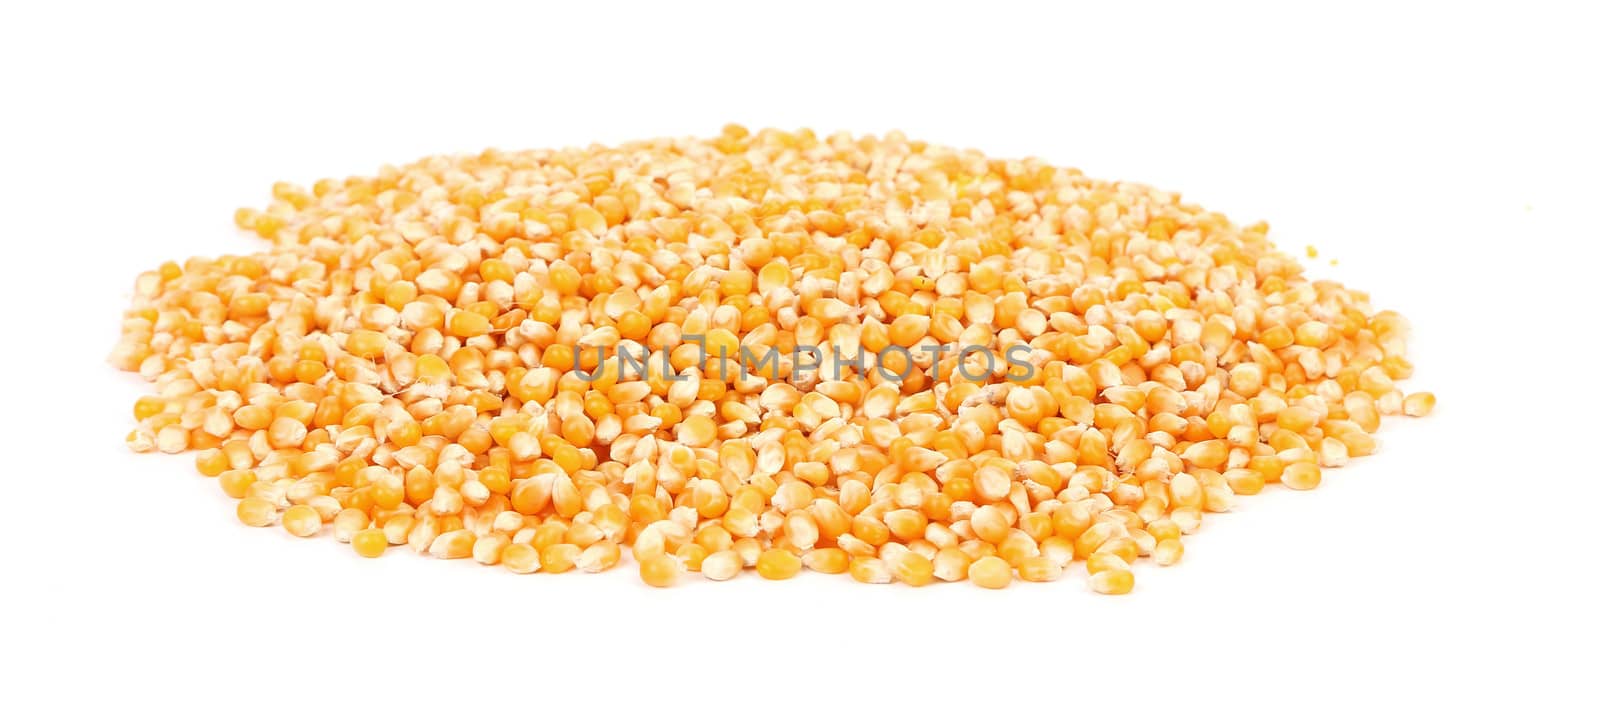 Ripe corn by indigolotos